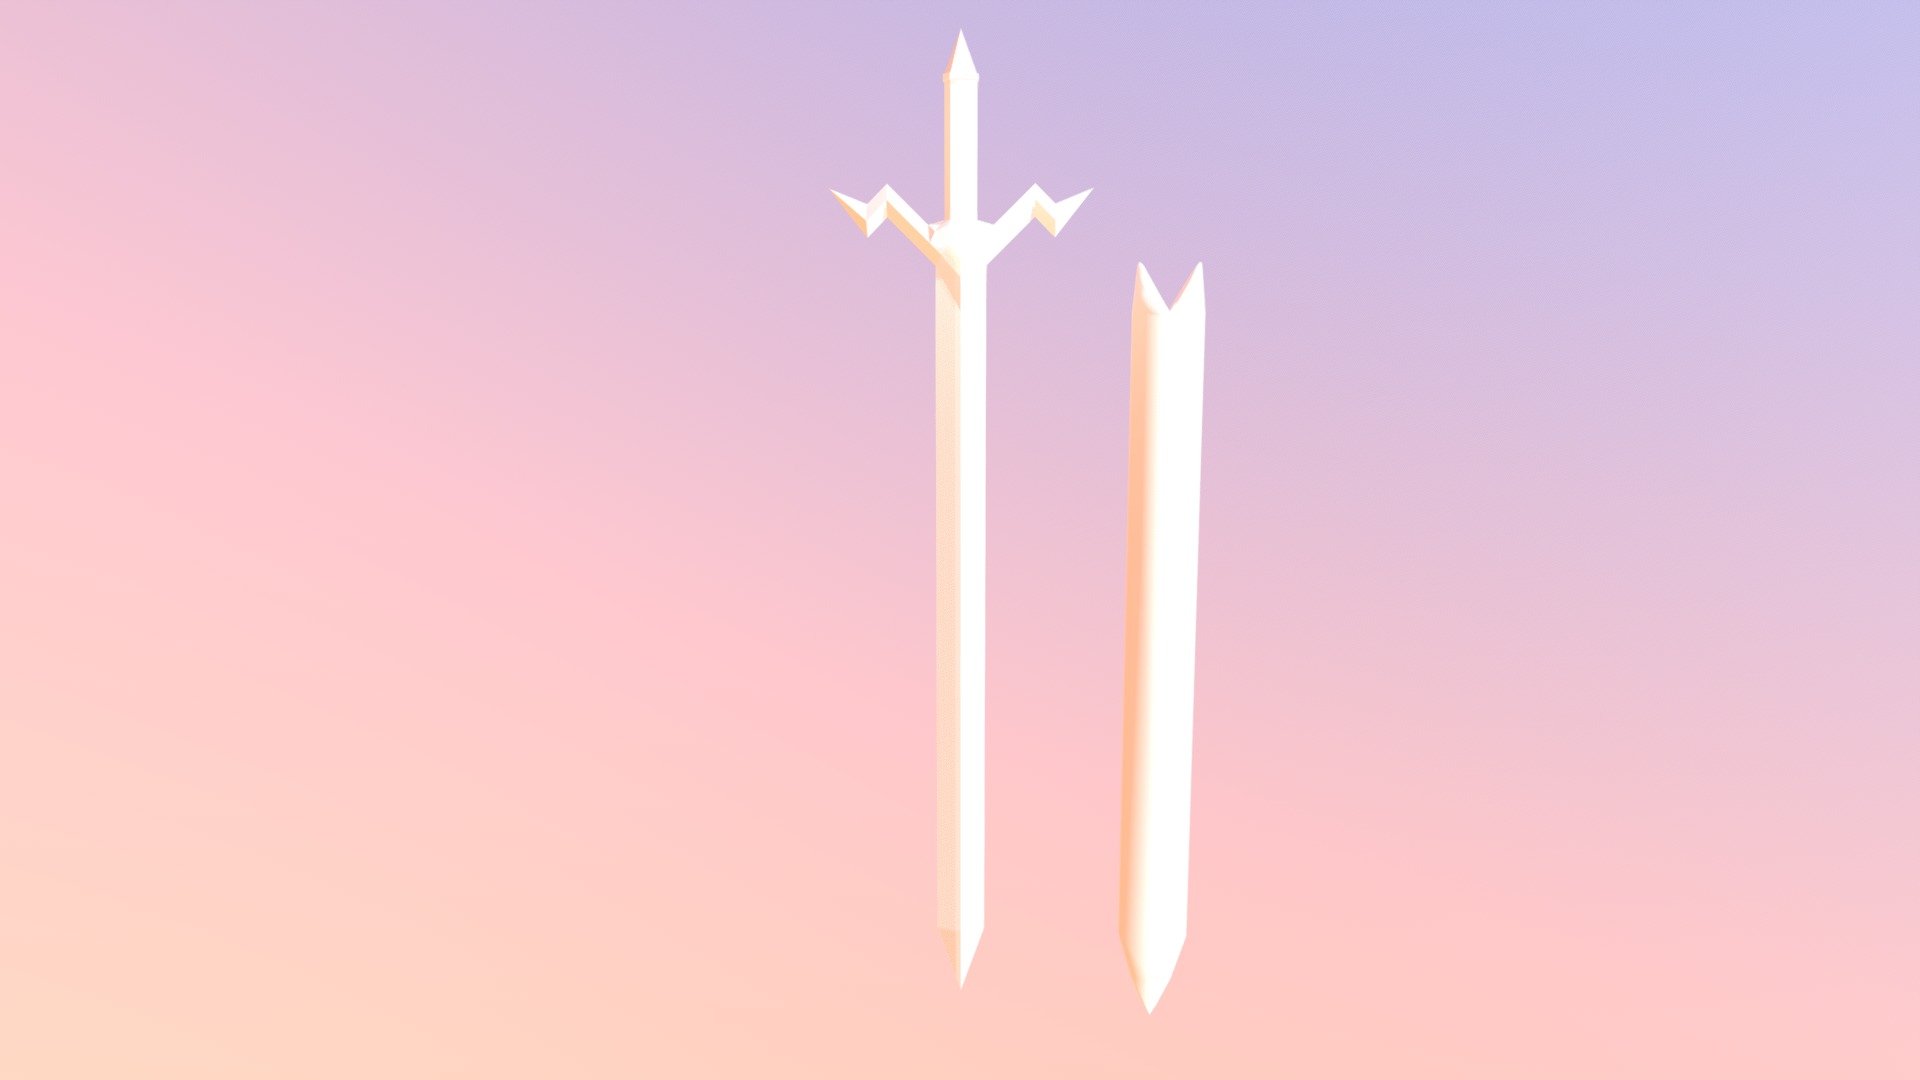 Kings-guard Sword